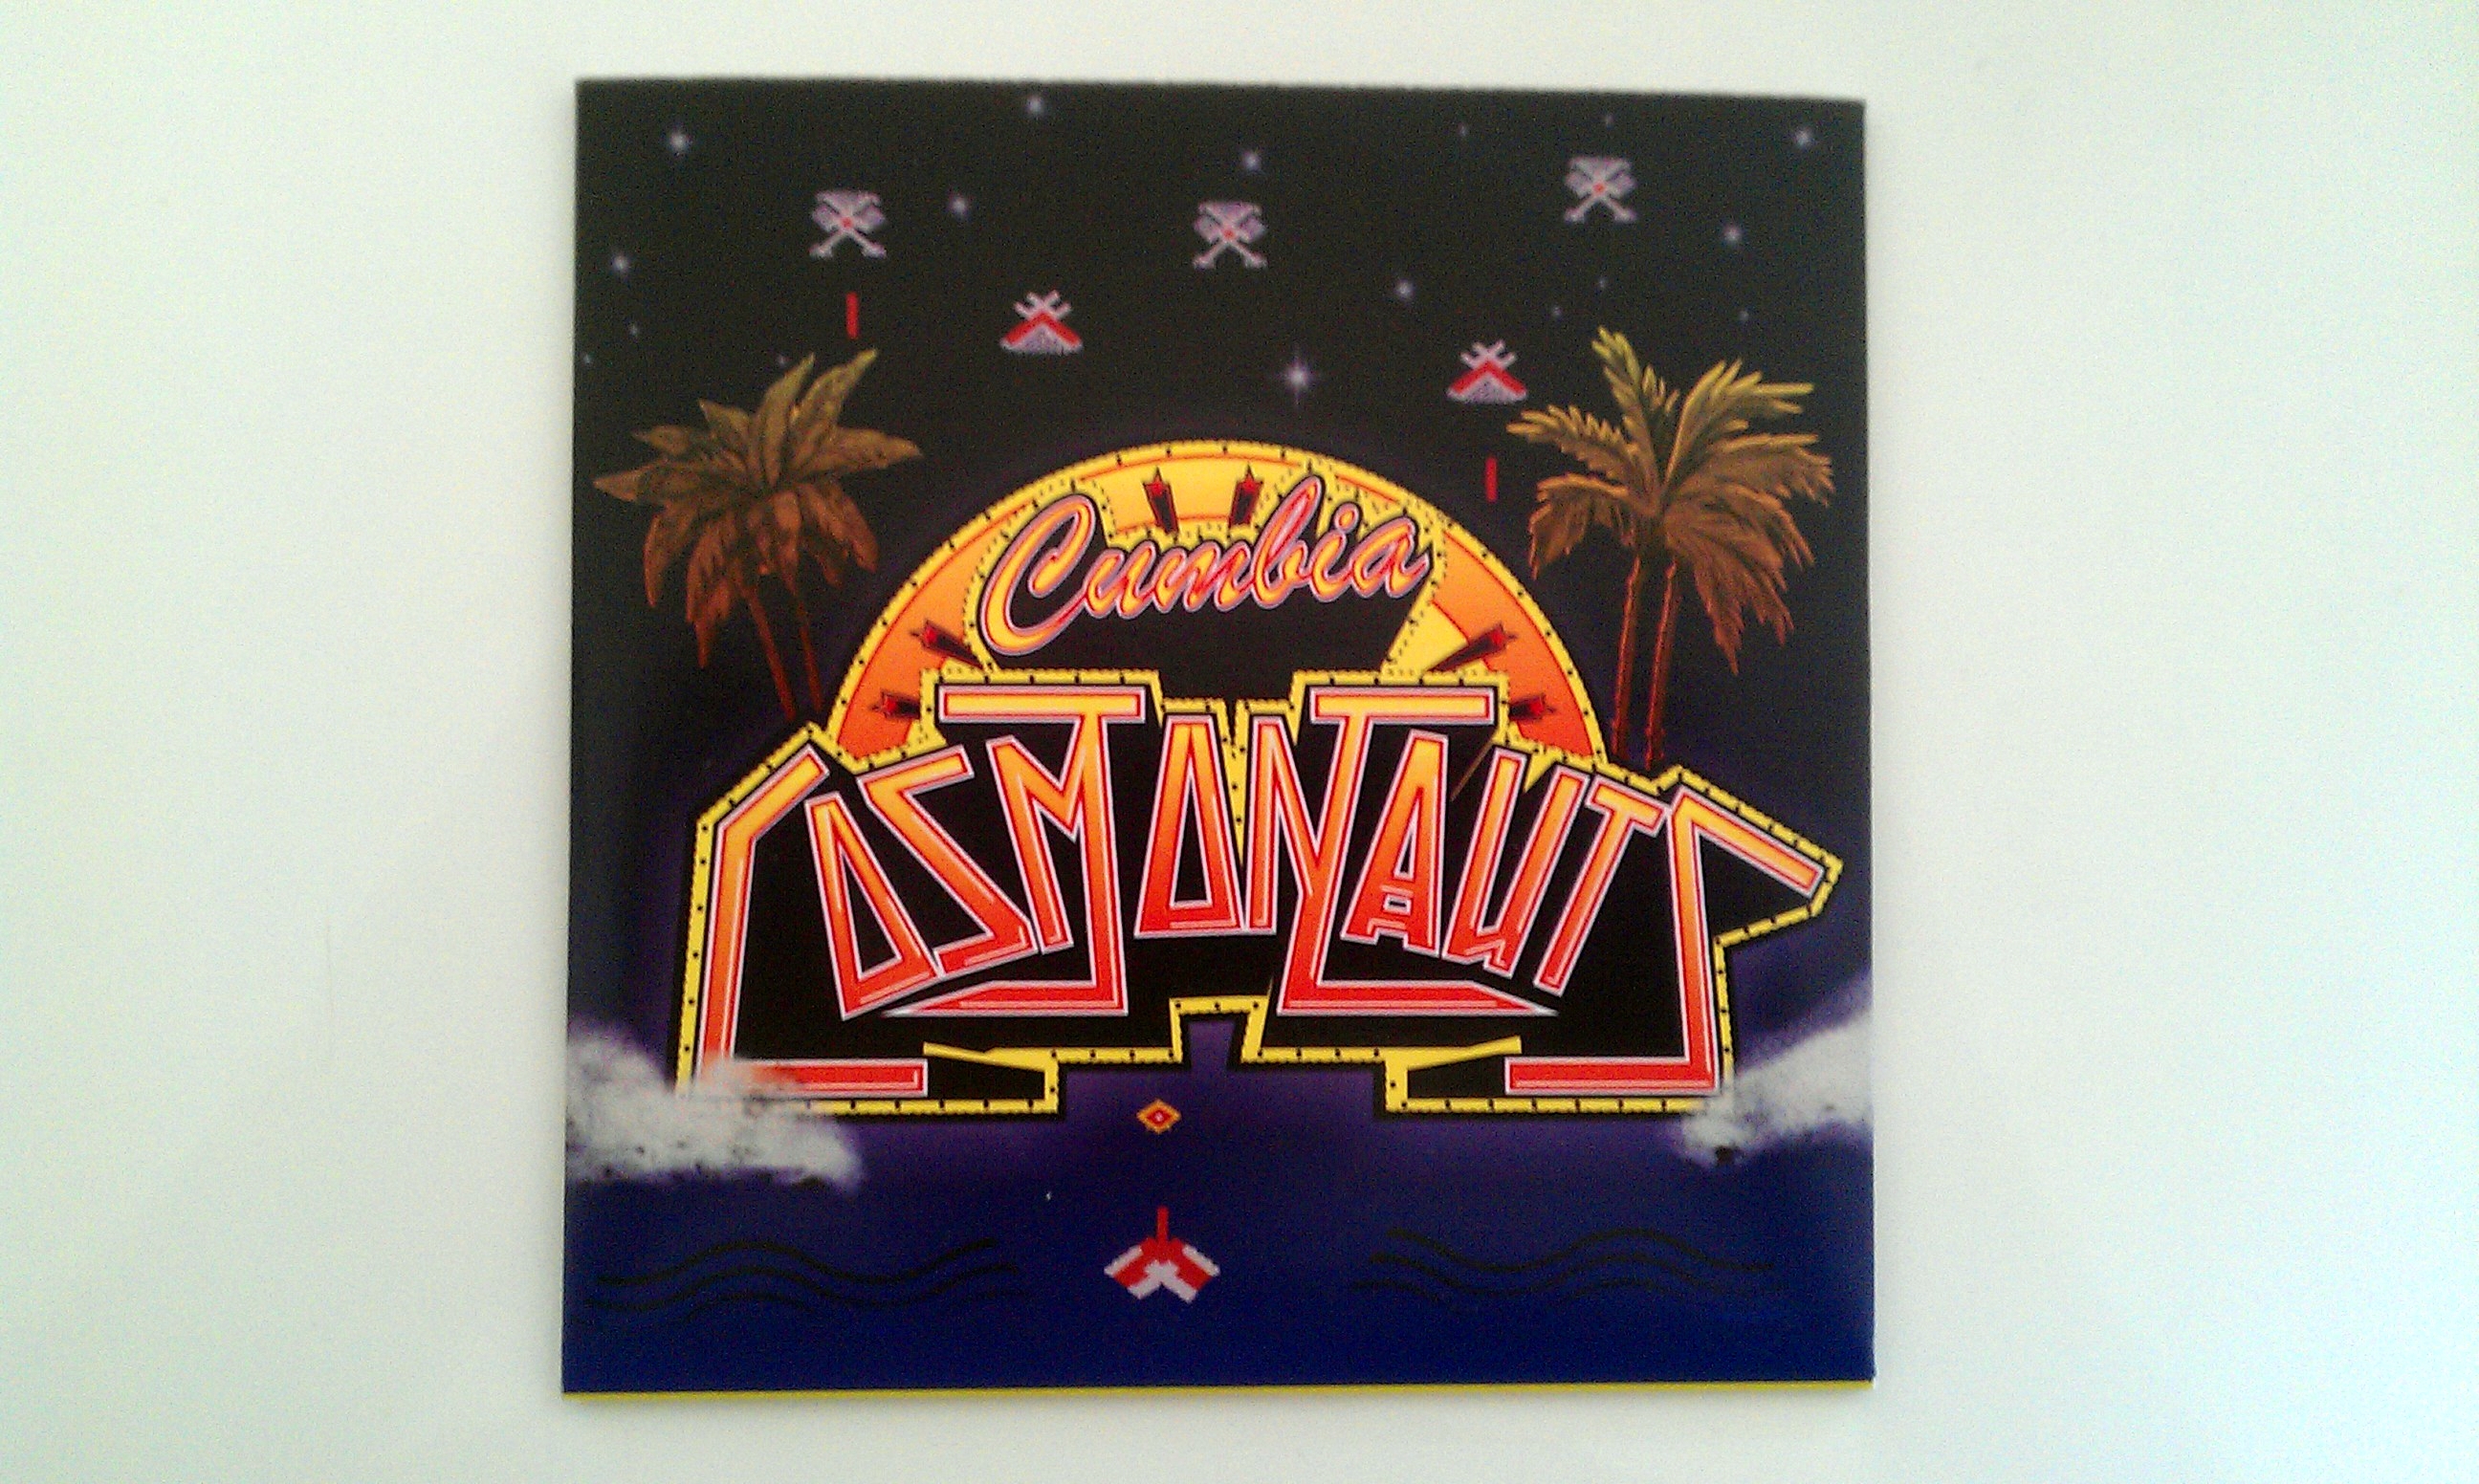 Cumbia Cosmonauts CD - Front